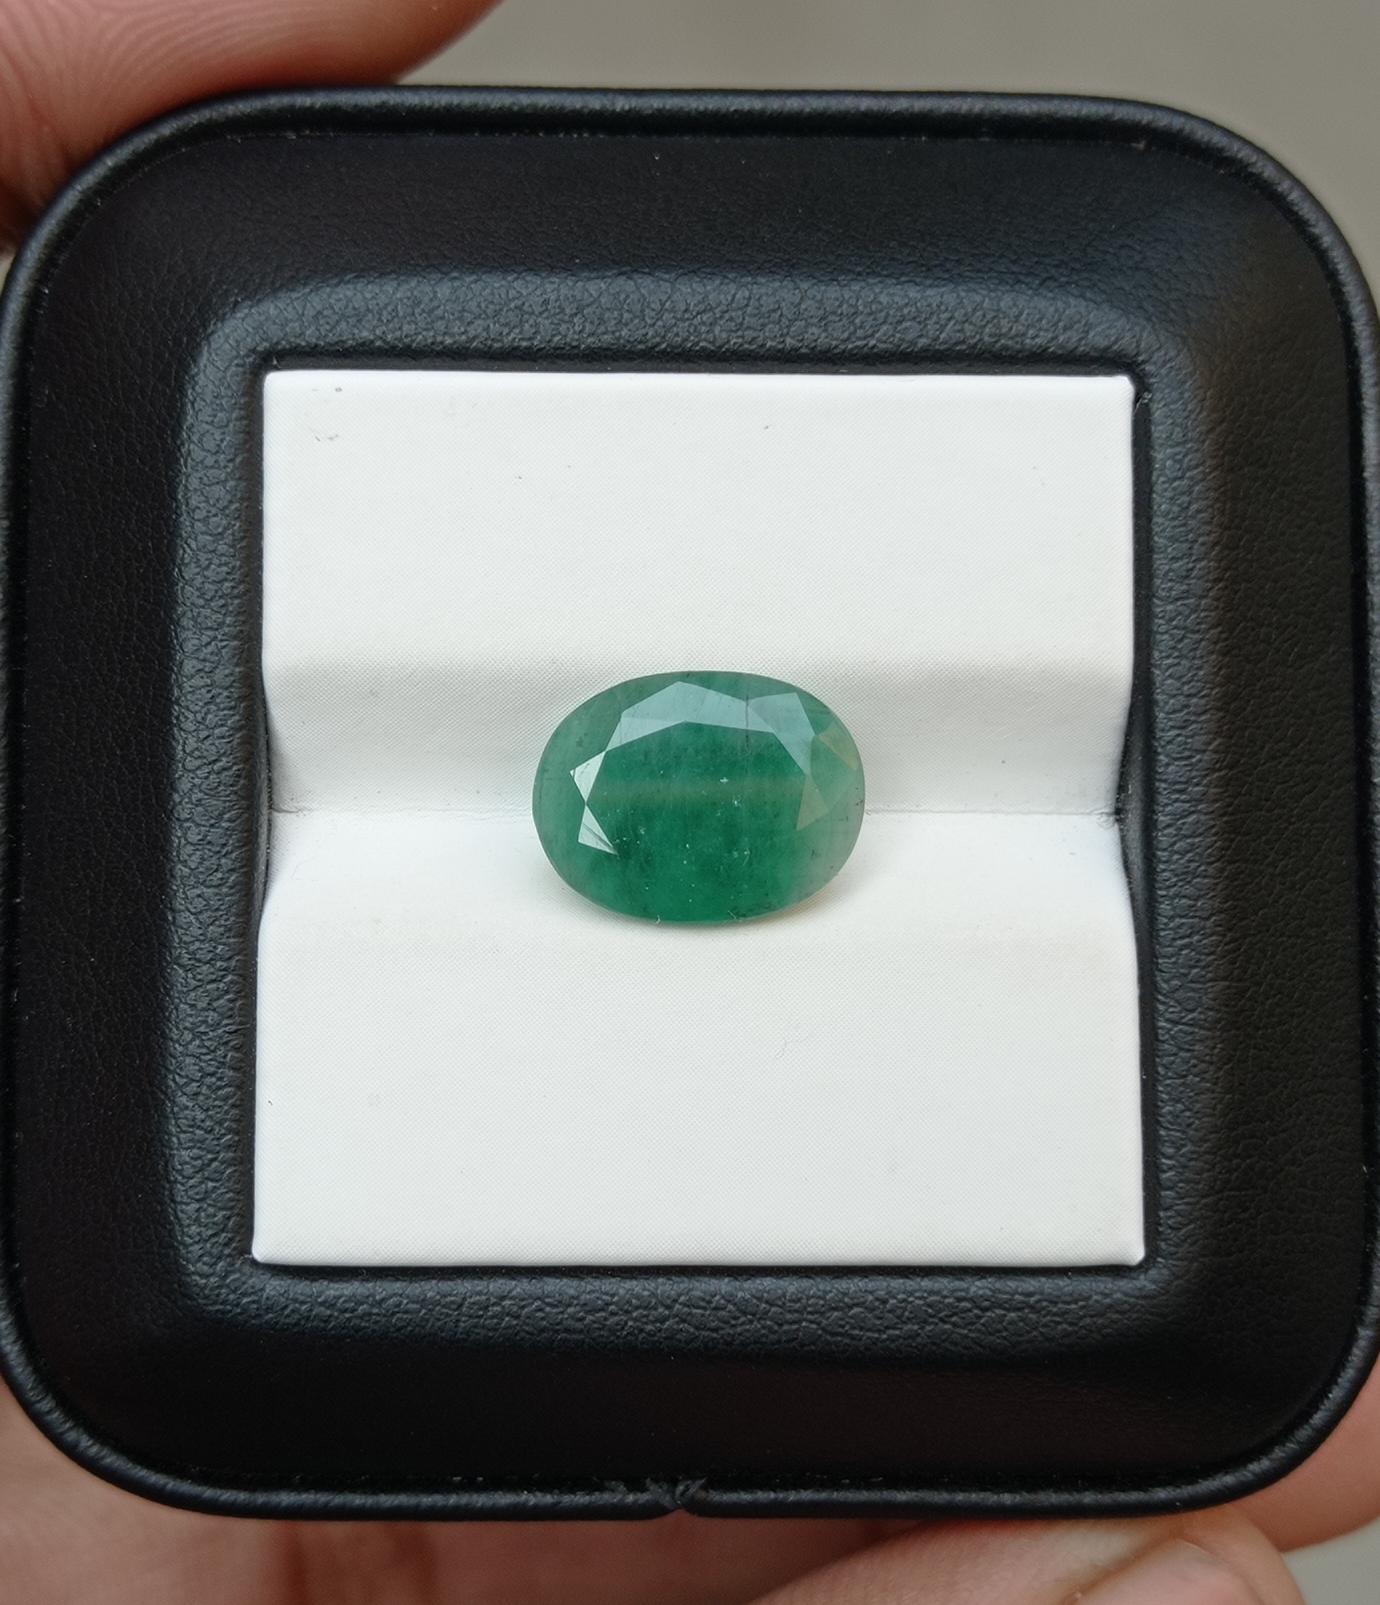 4ct Emerald for sale - Budh Ratna - Zamurd - Pachu Stone, Markat Mani Stone - 13x9.8x4.1mm